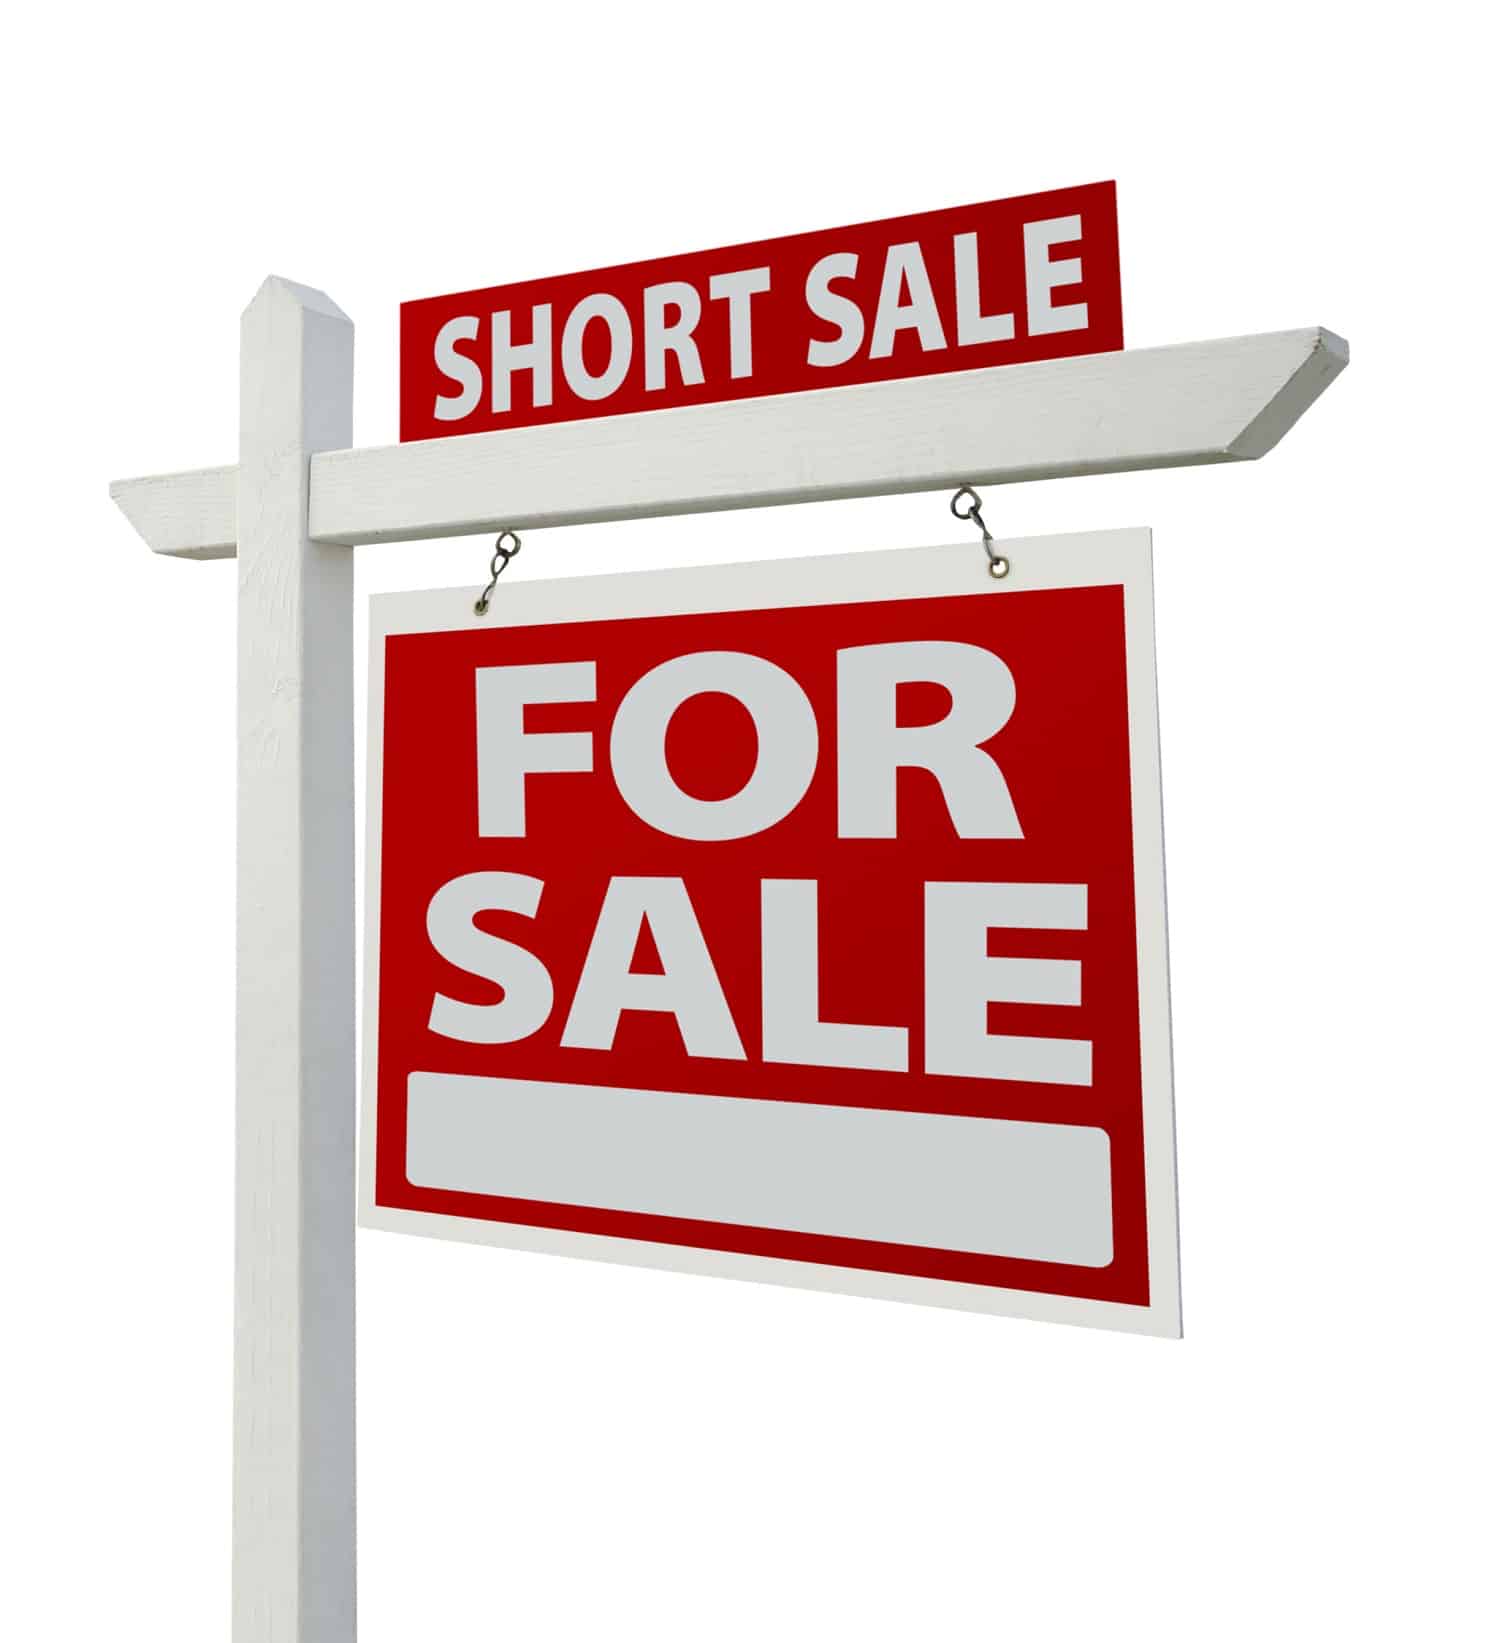 What is a Short Sale - DTLA Condos for Sale